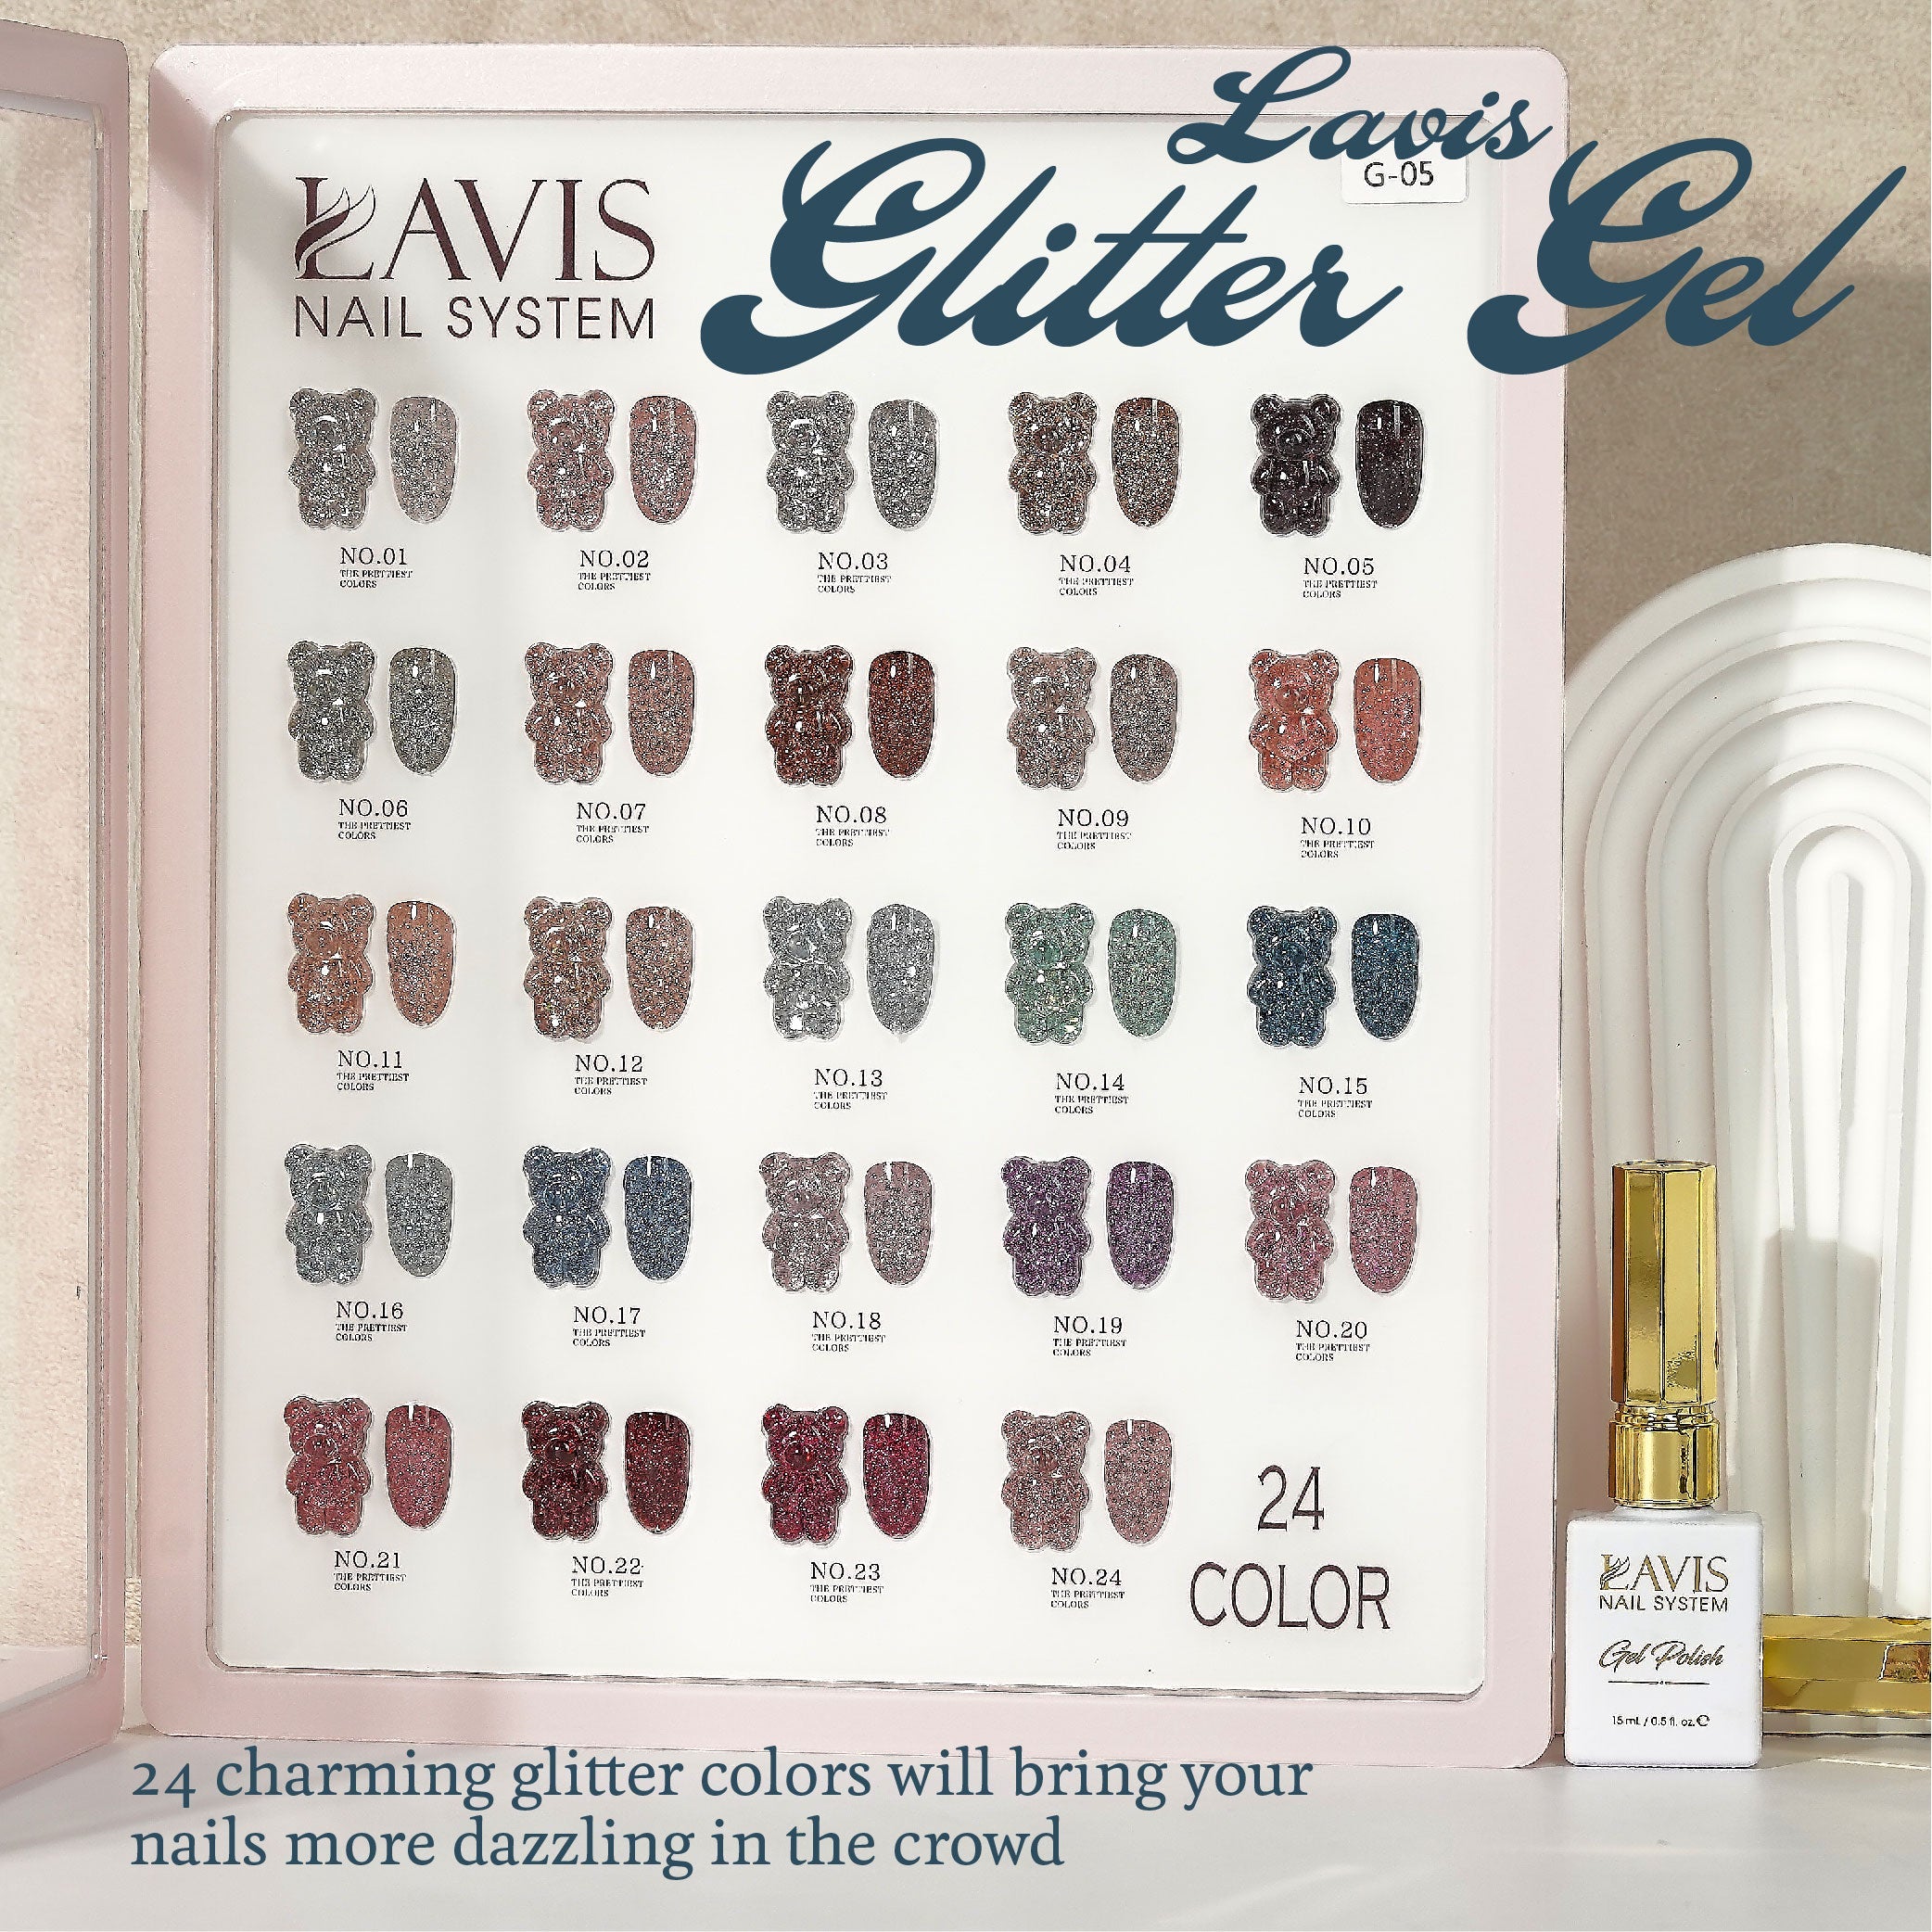 LAVIS Glitter G05 - 24 - Gel Polish 0.5oz - Champagne Toast Glitter Collection